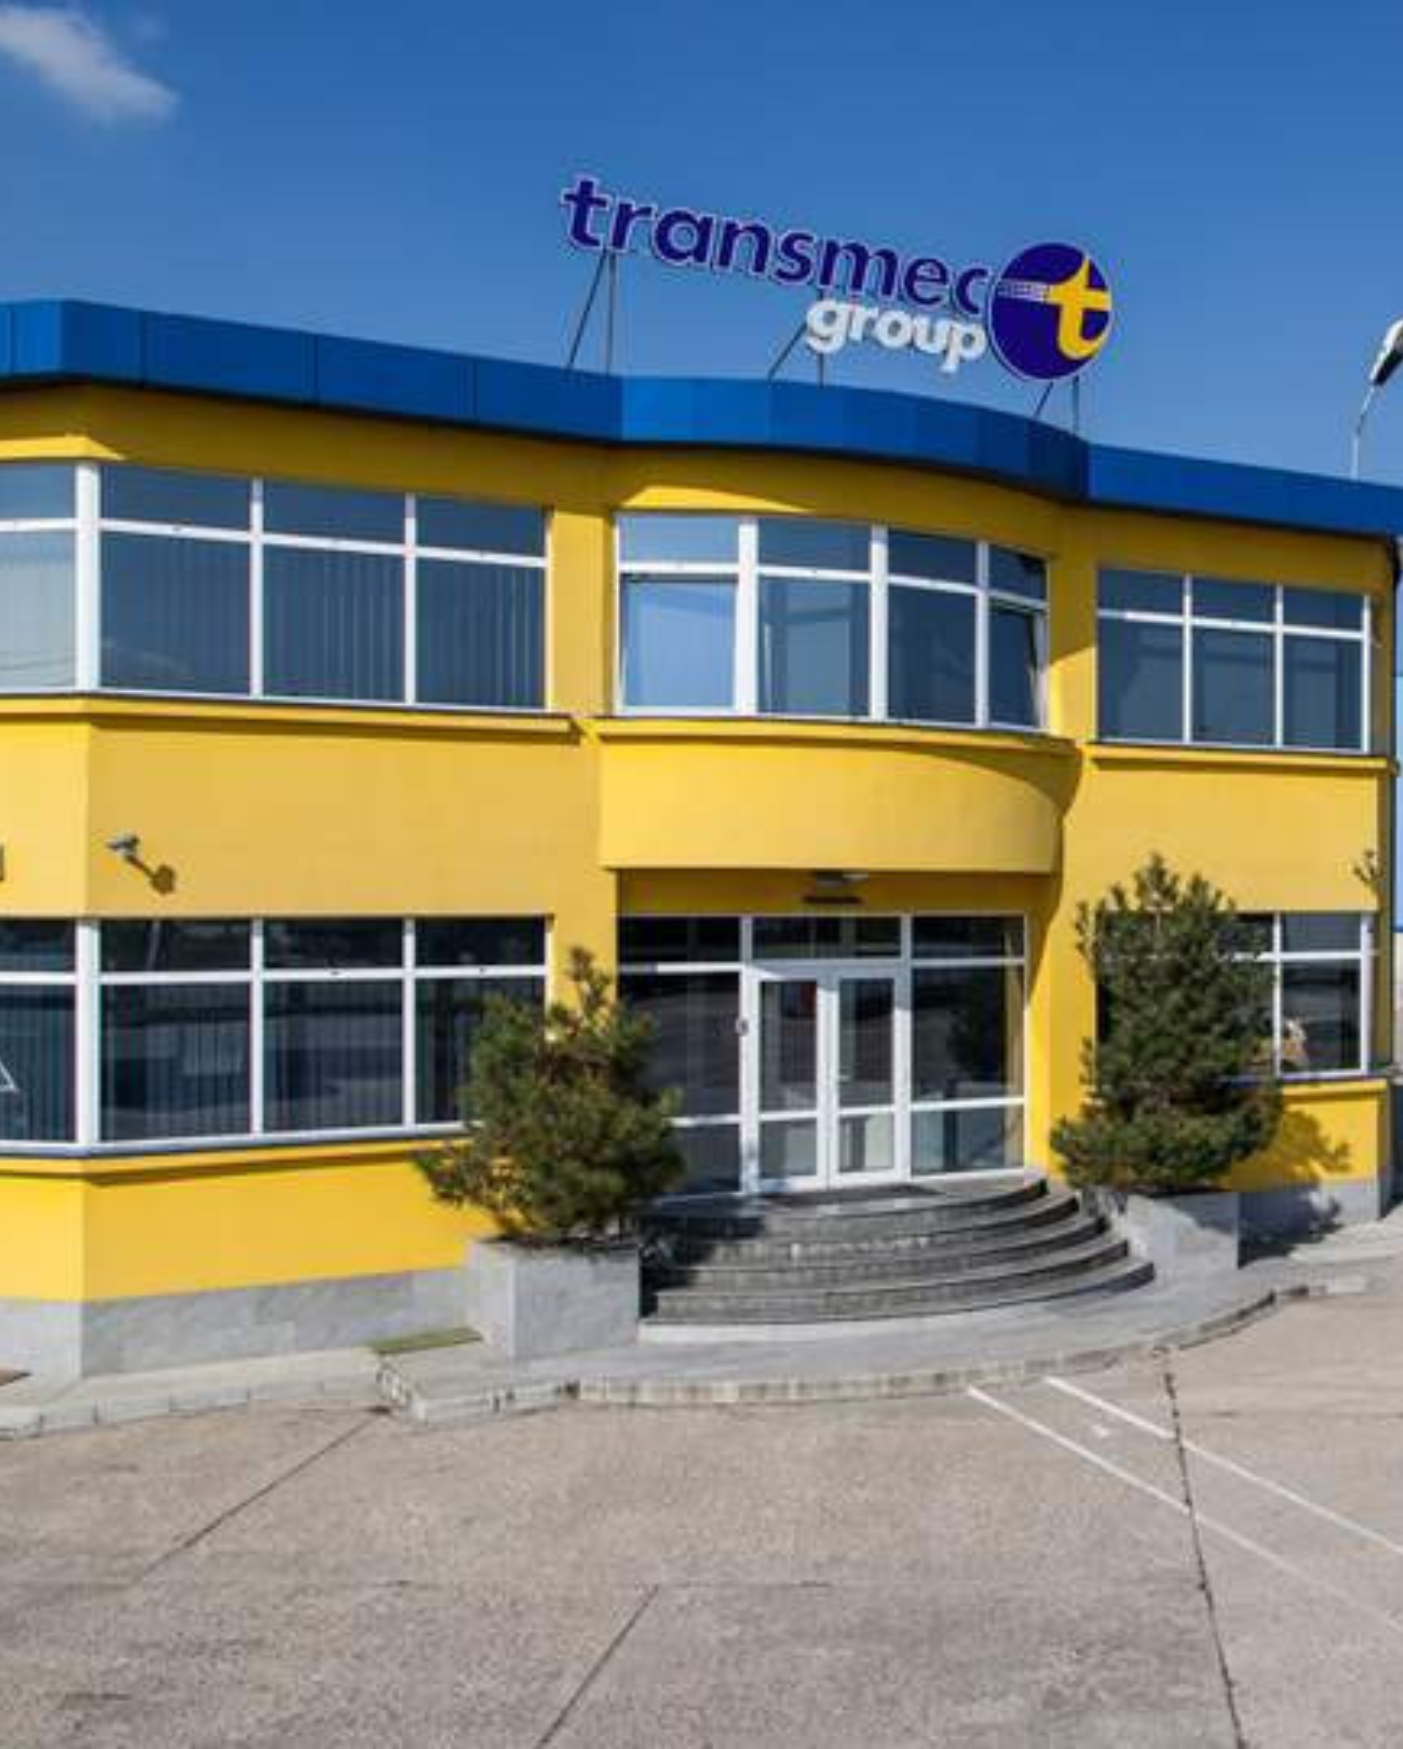 Transmec Romania in continua espansione - Transmec Group